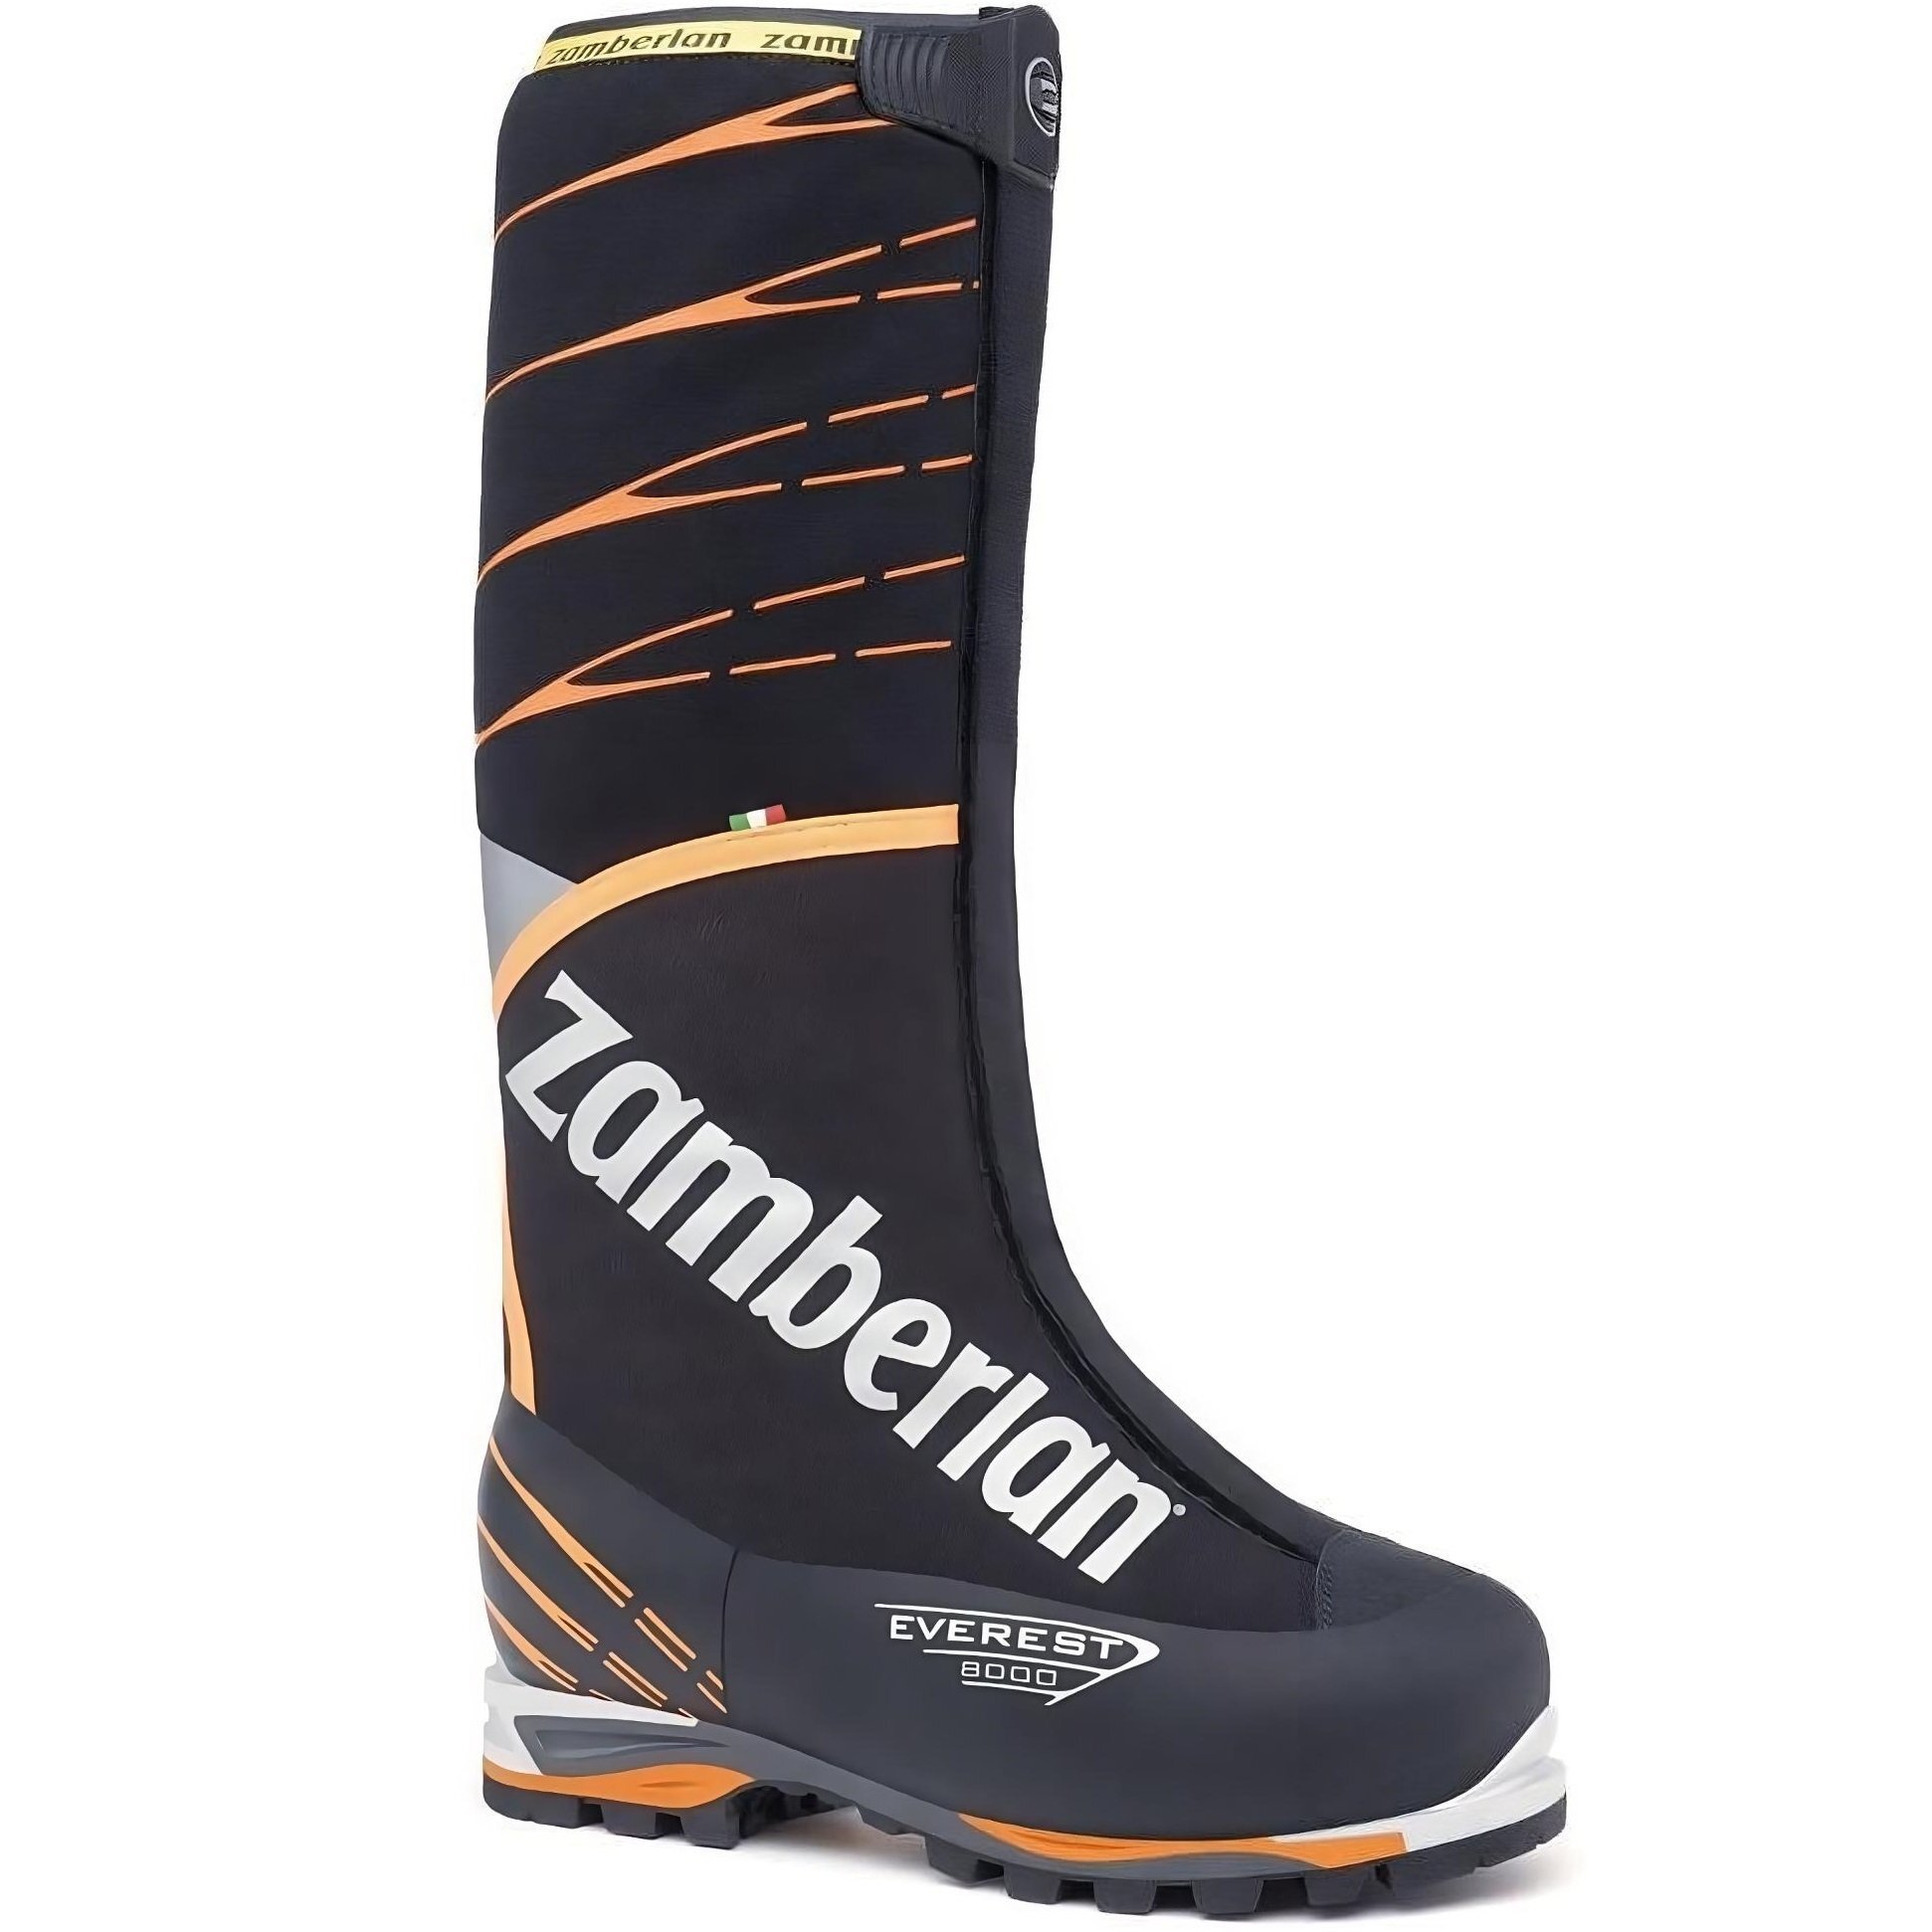 Ботинки Zamberlan 8000 Everest Evo RR black/orange 48 черный/оранжевый фото 1